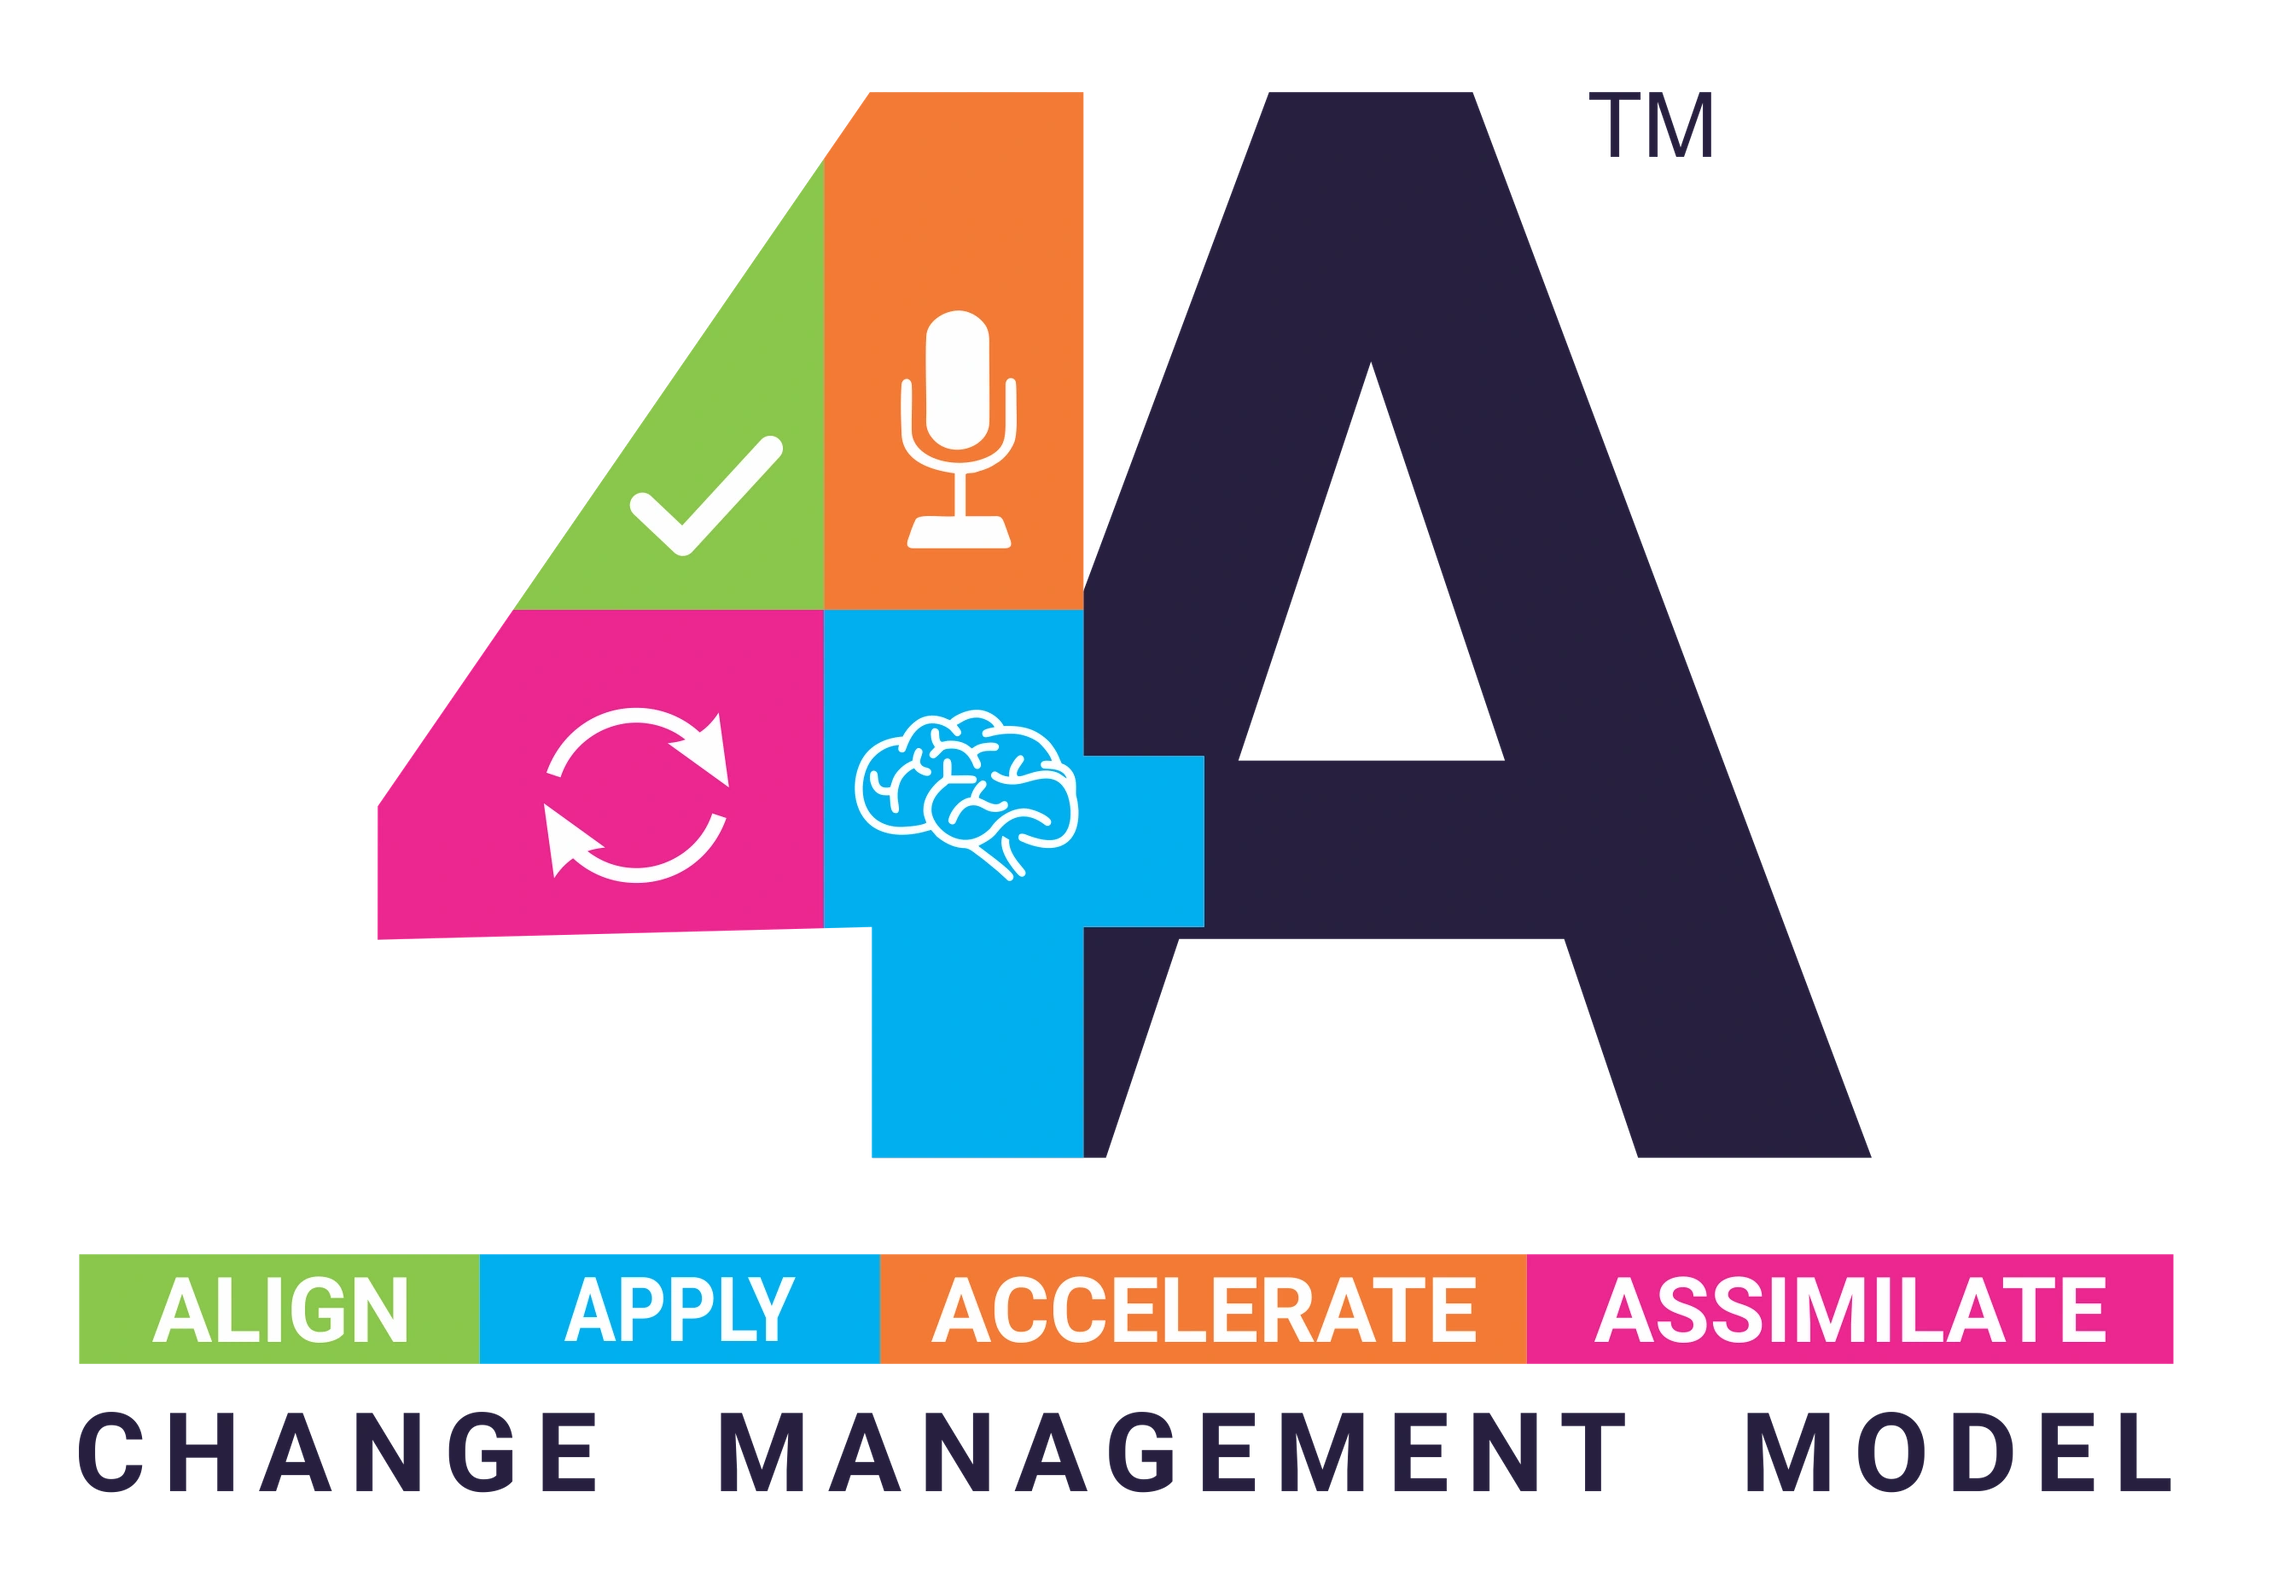 4A Model of Change